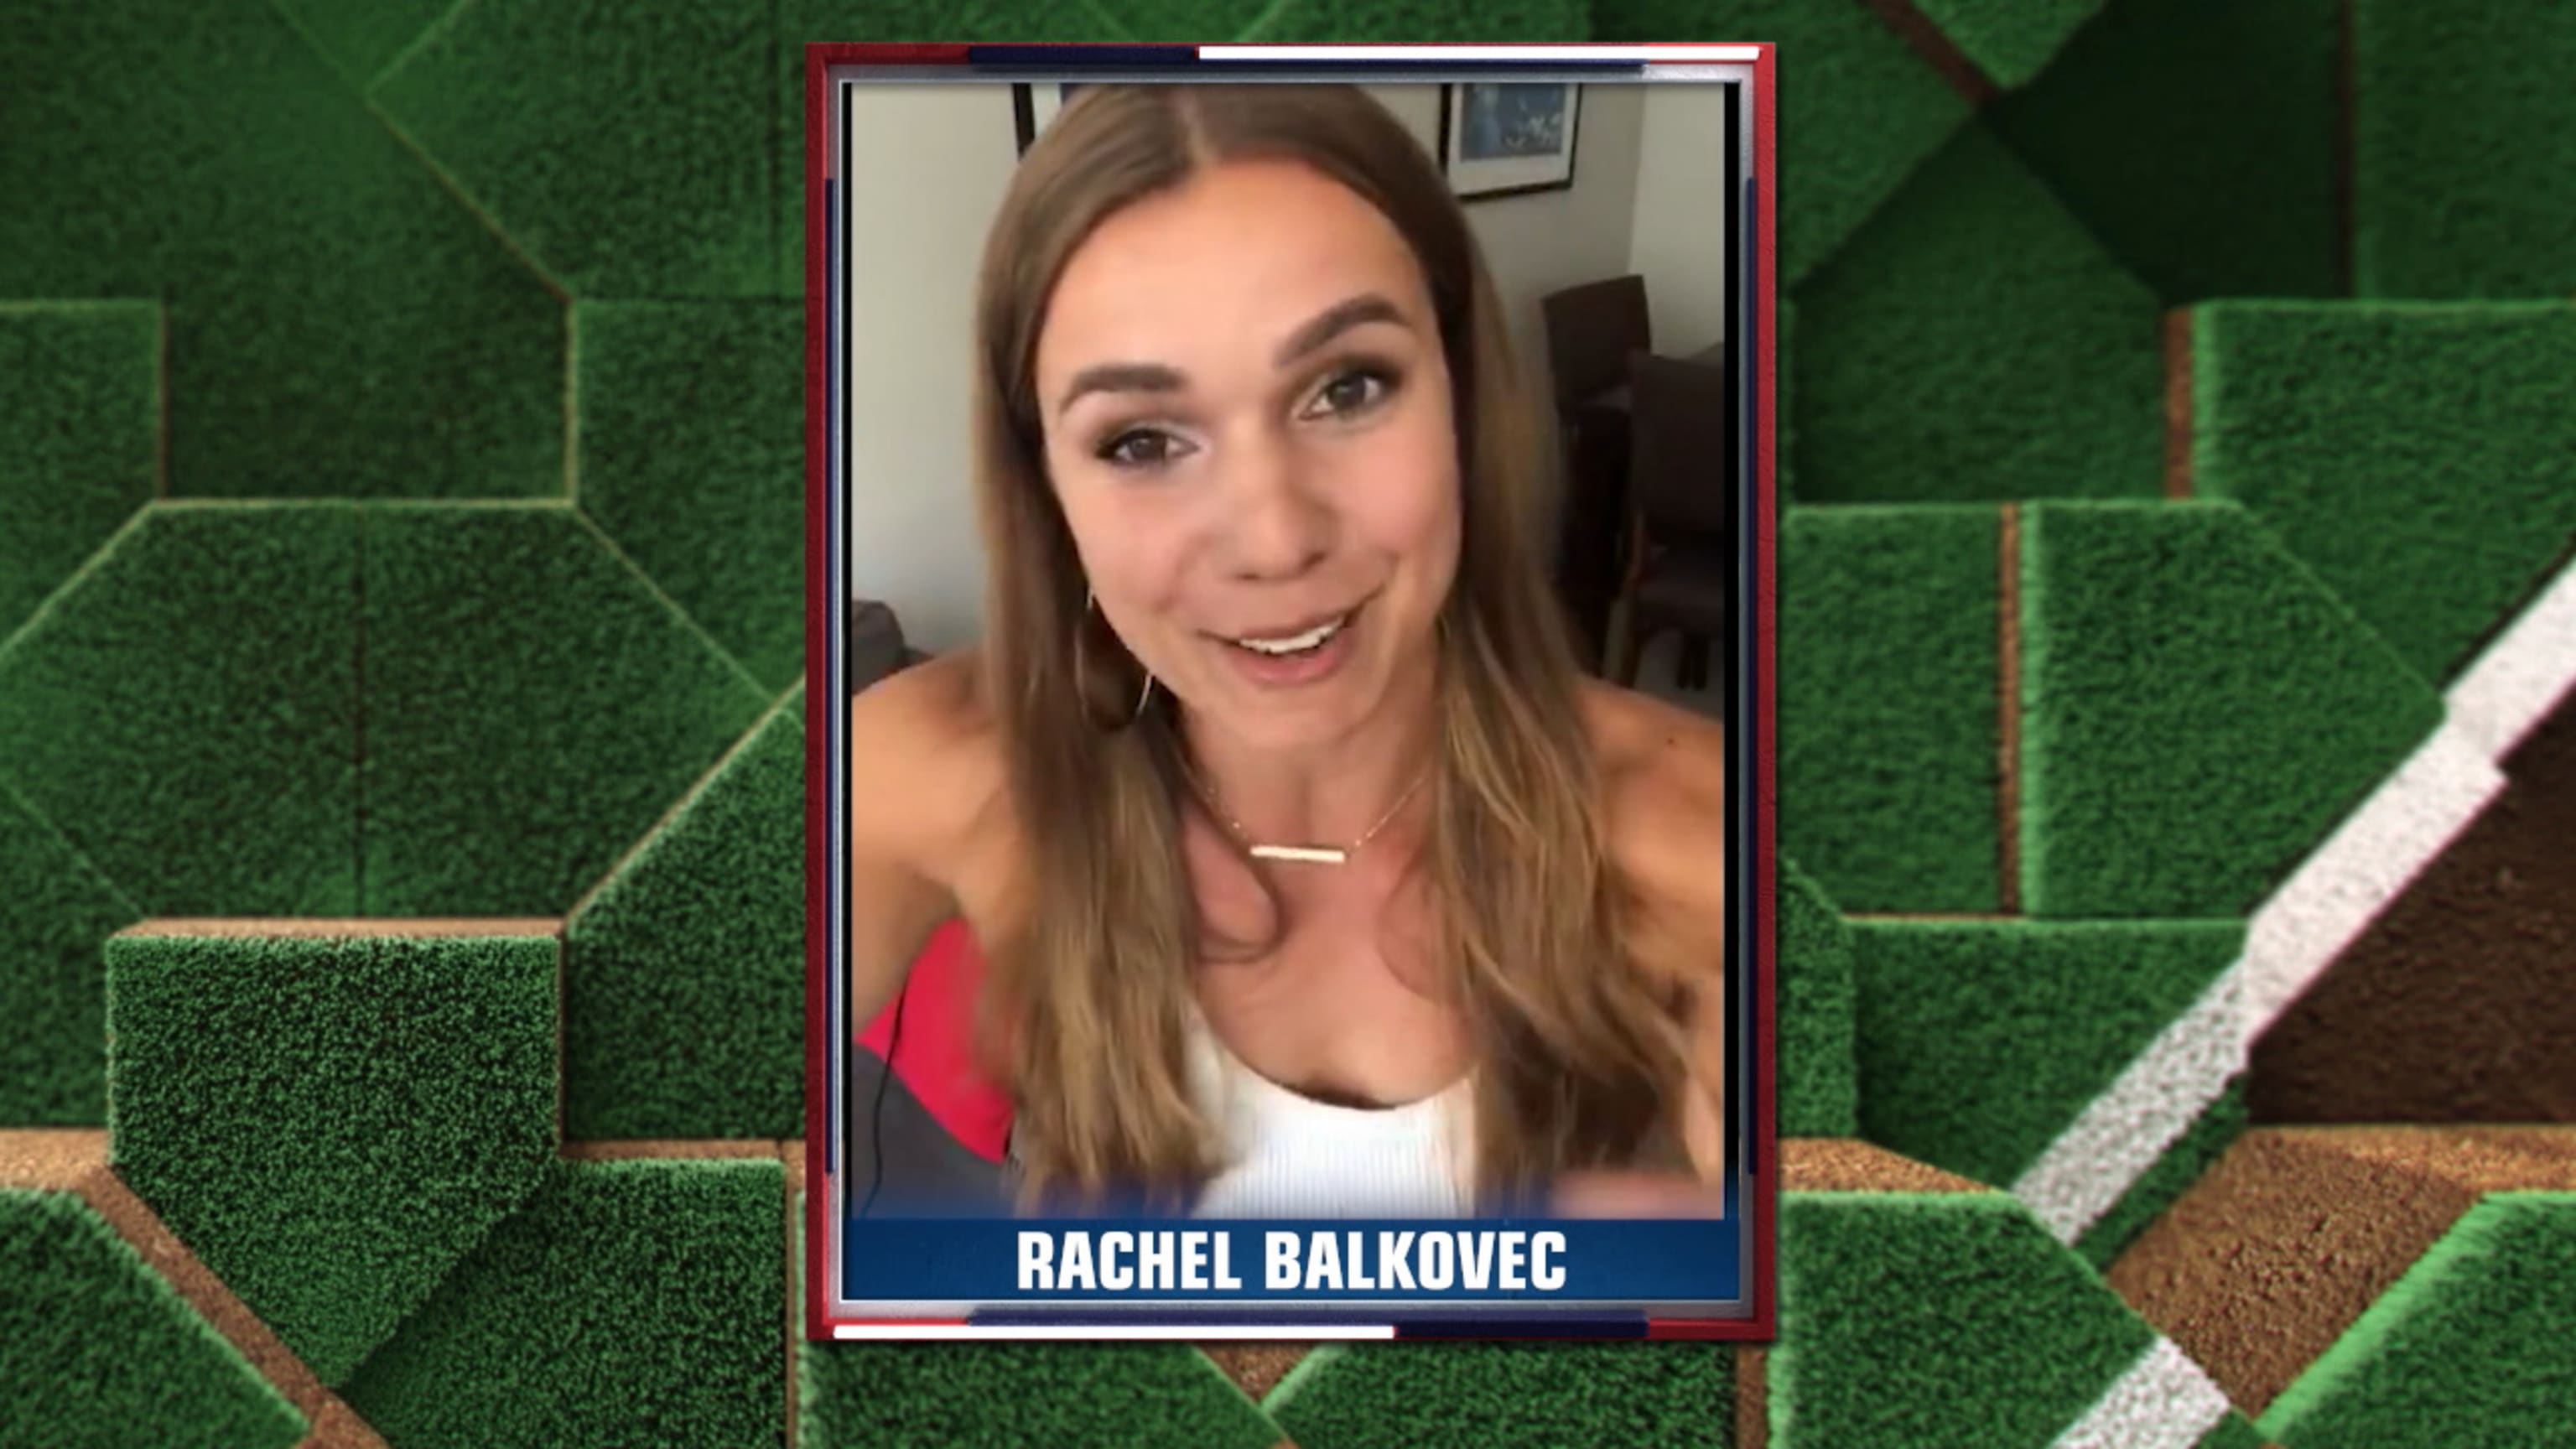 Rachel Balkovec cheered, wins debut managing Yanks affiliate